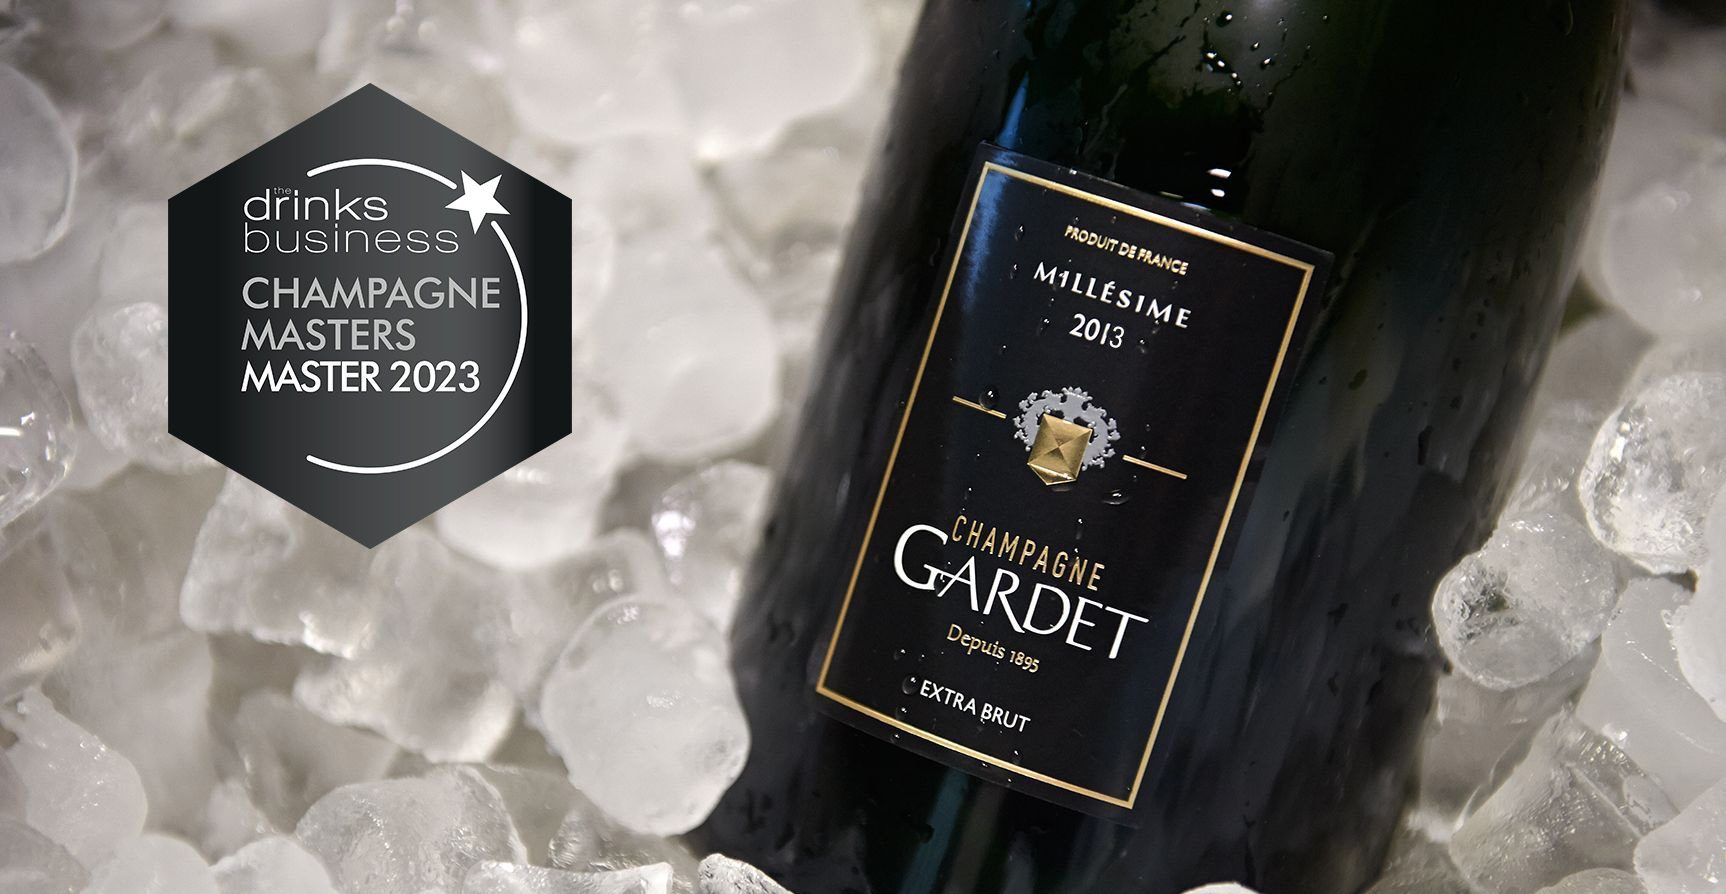 International success for Champagne Gardet